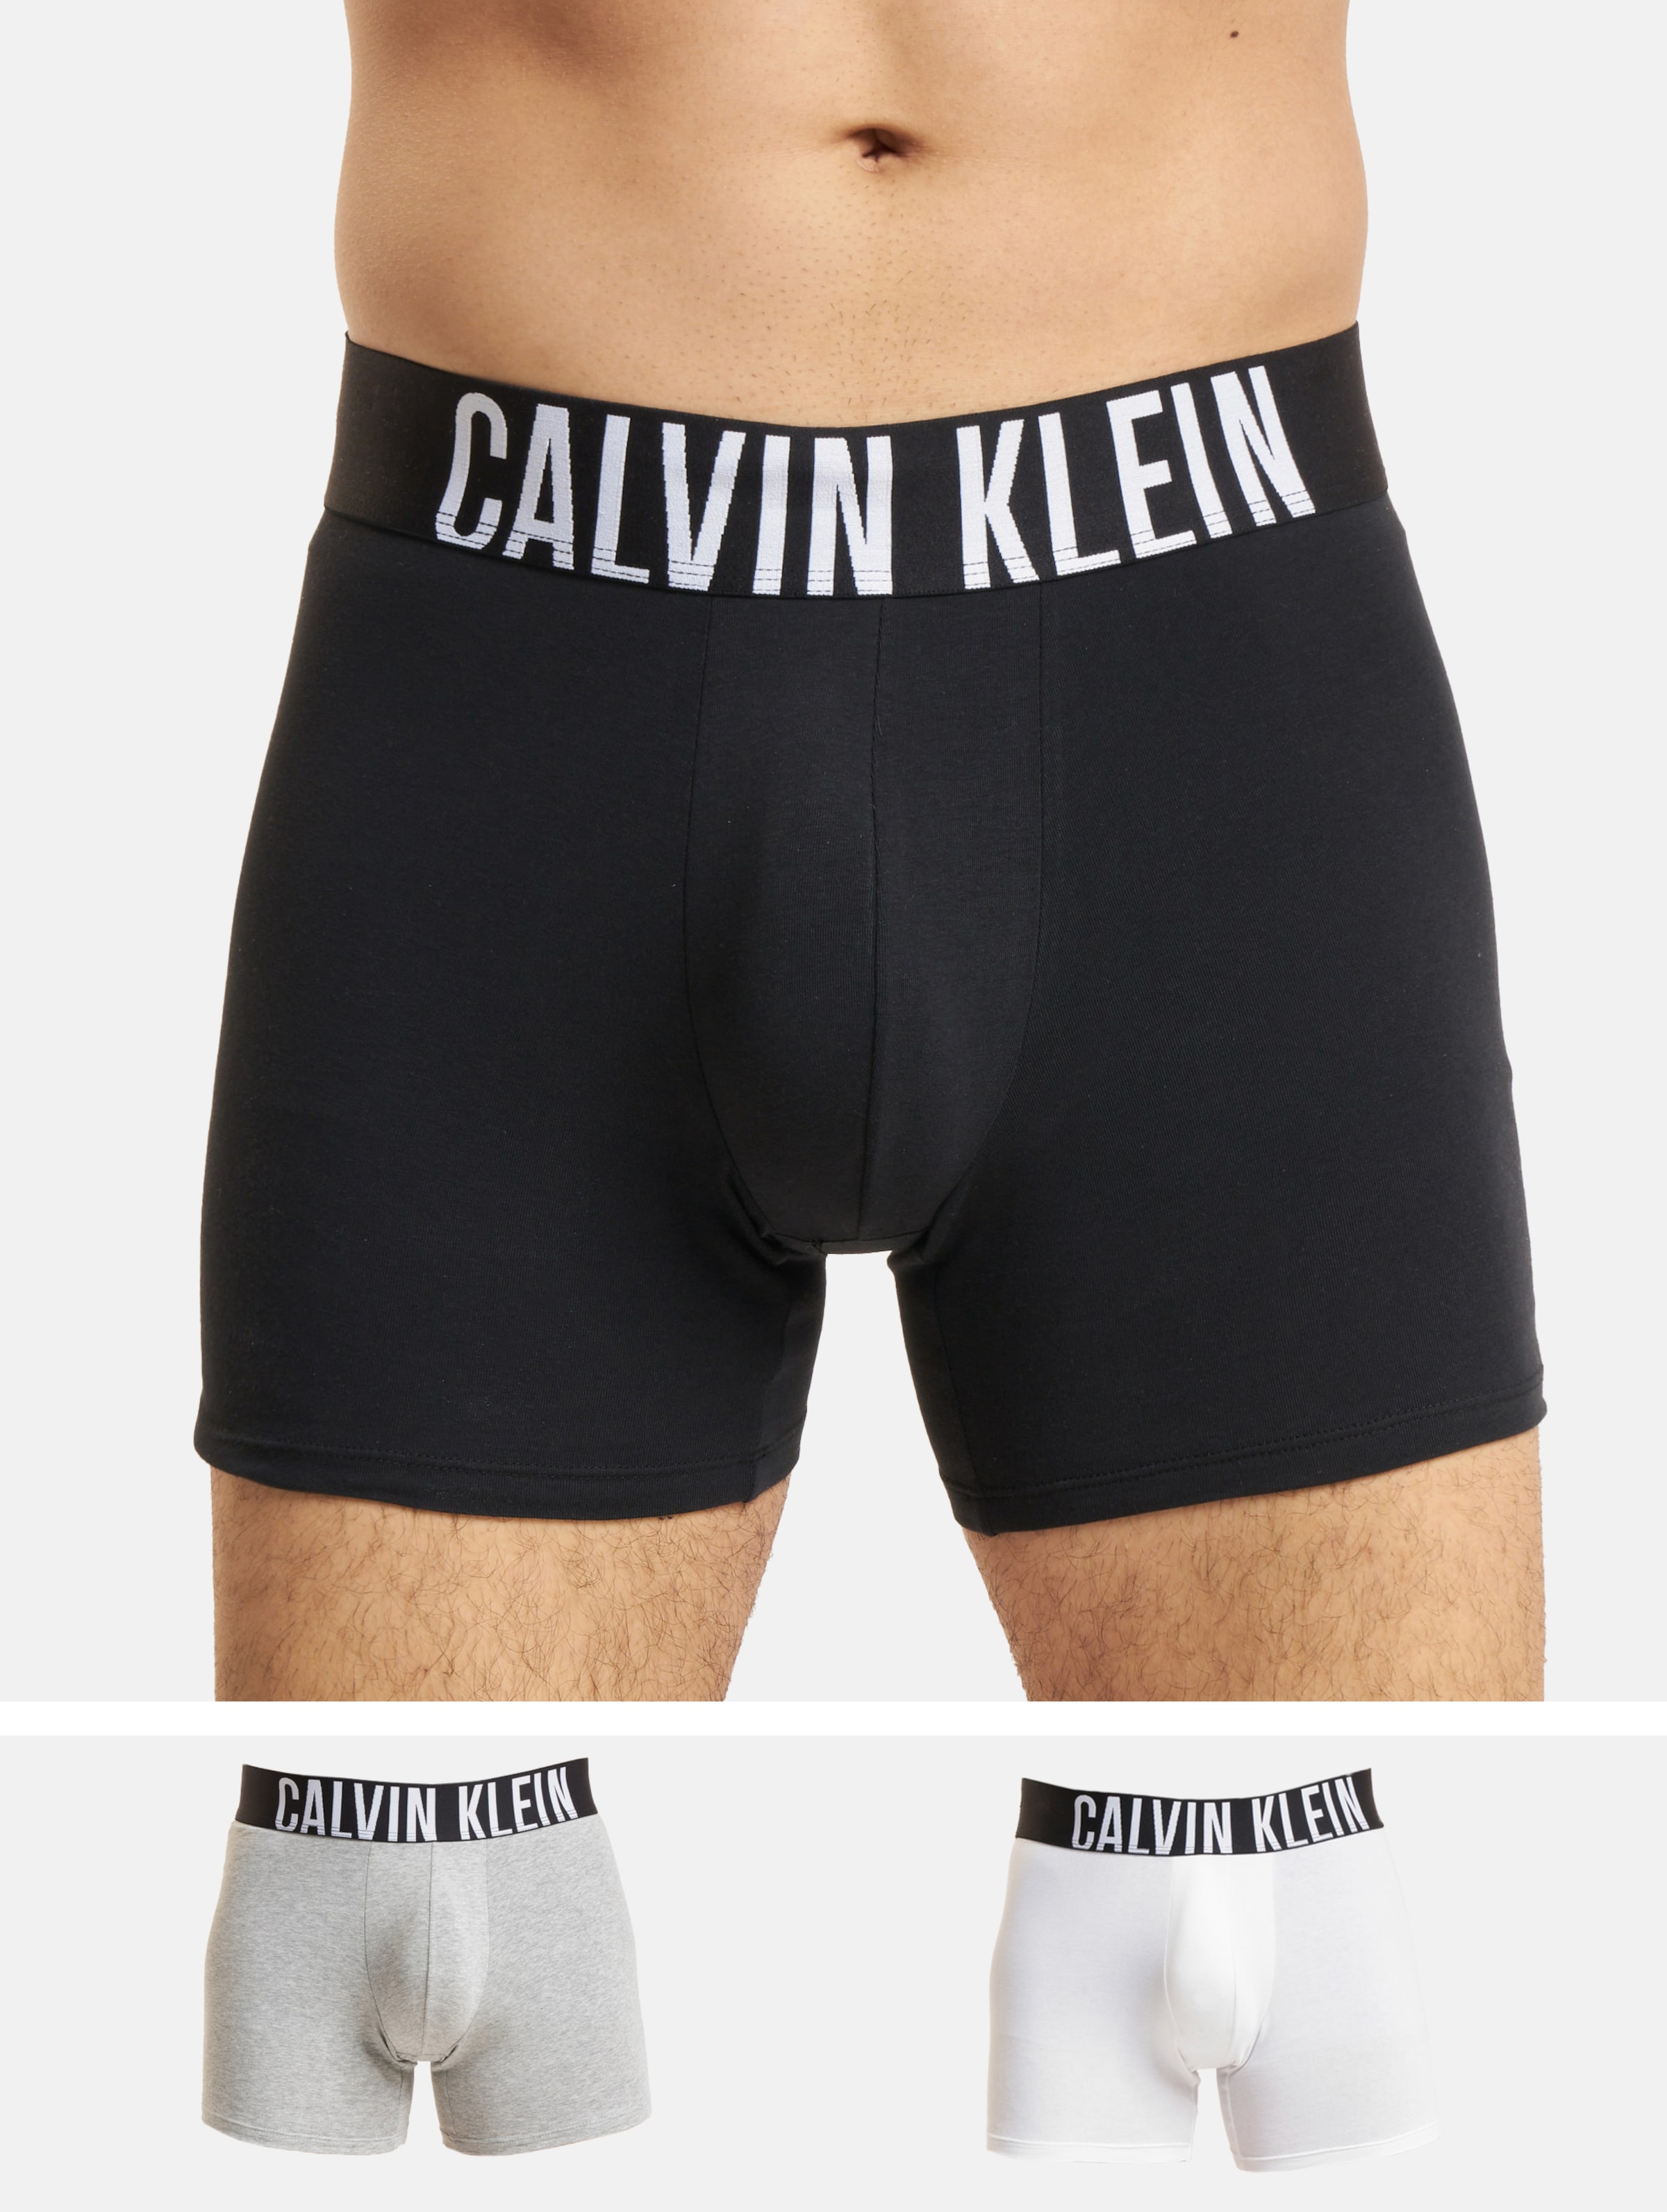 Calvin Klein Brief 3 Pack Boxershorts Männer,Unisex op kleur grijs, Maat S